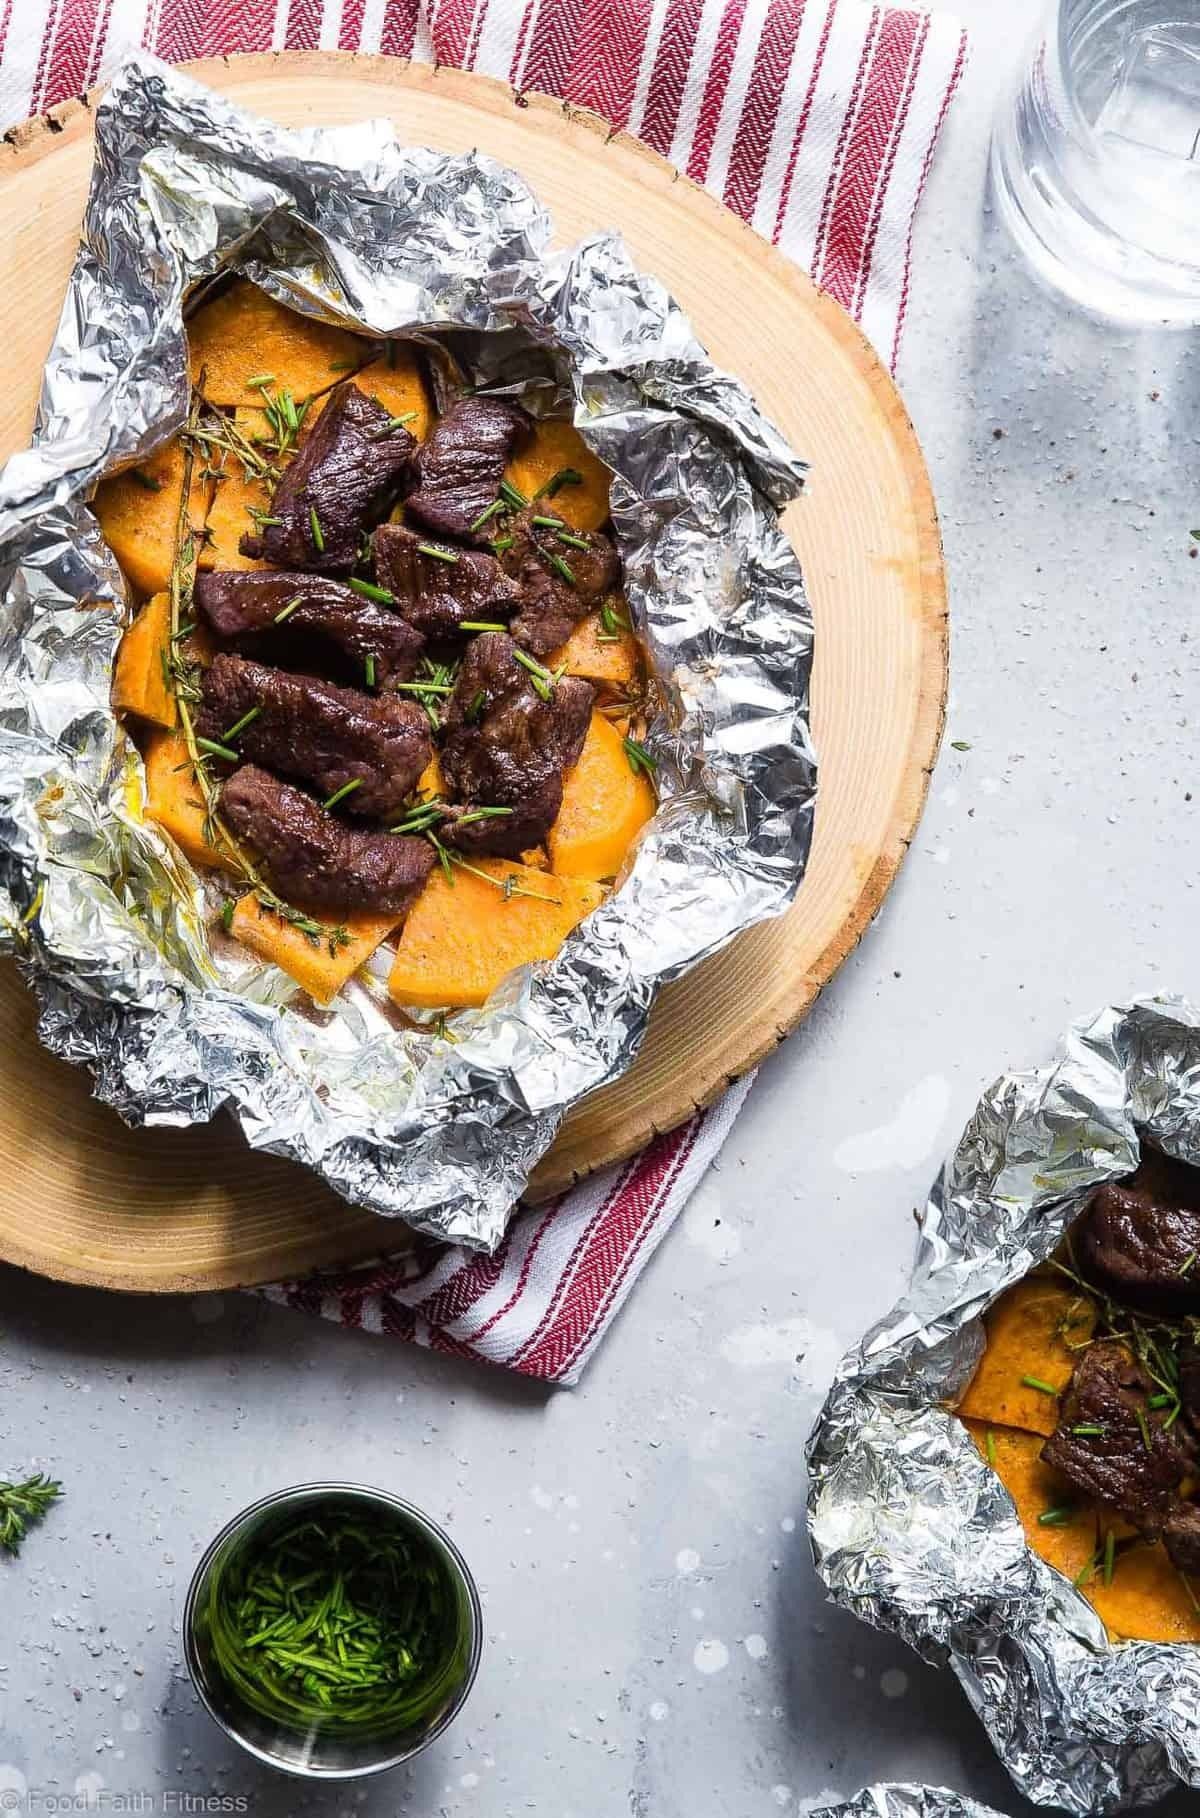 11 Campfire Foil Recipes We Love for Convenient Meals